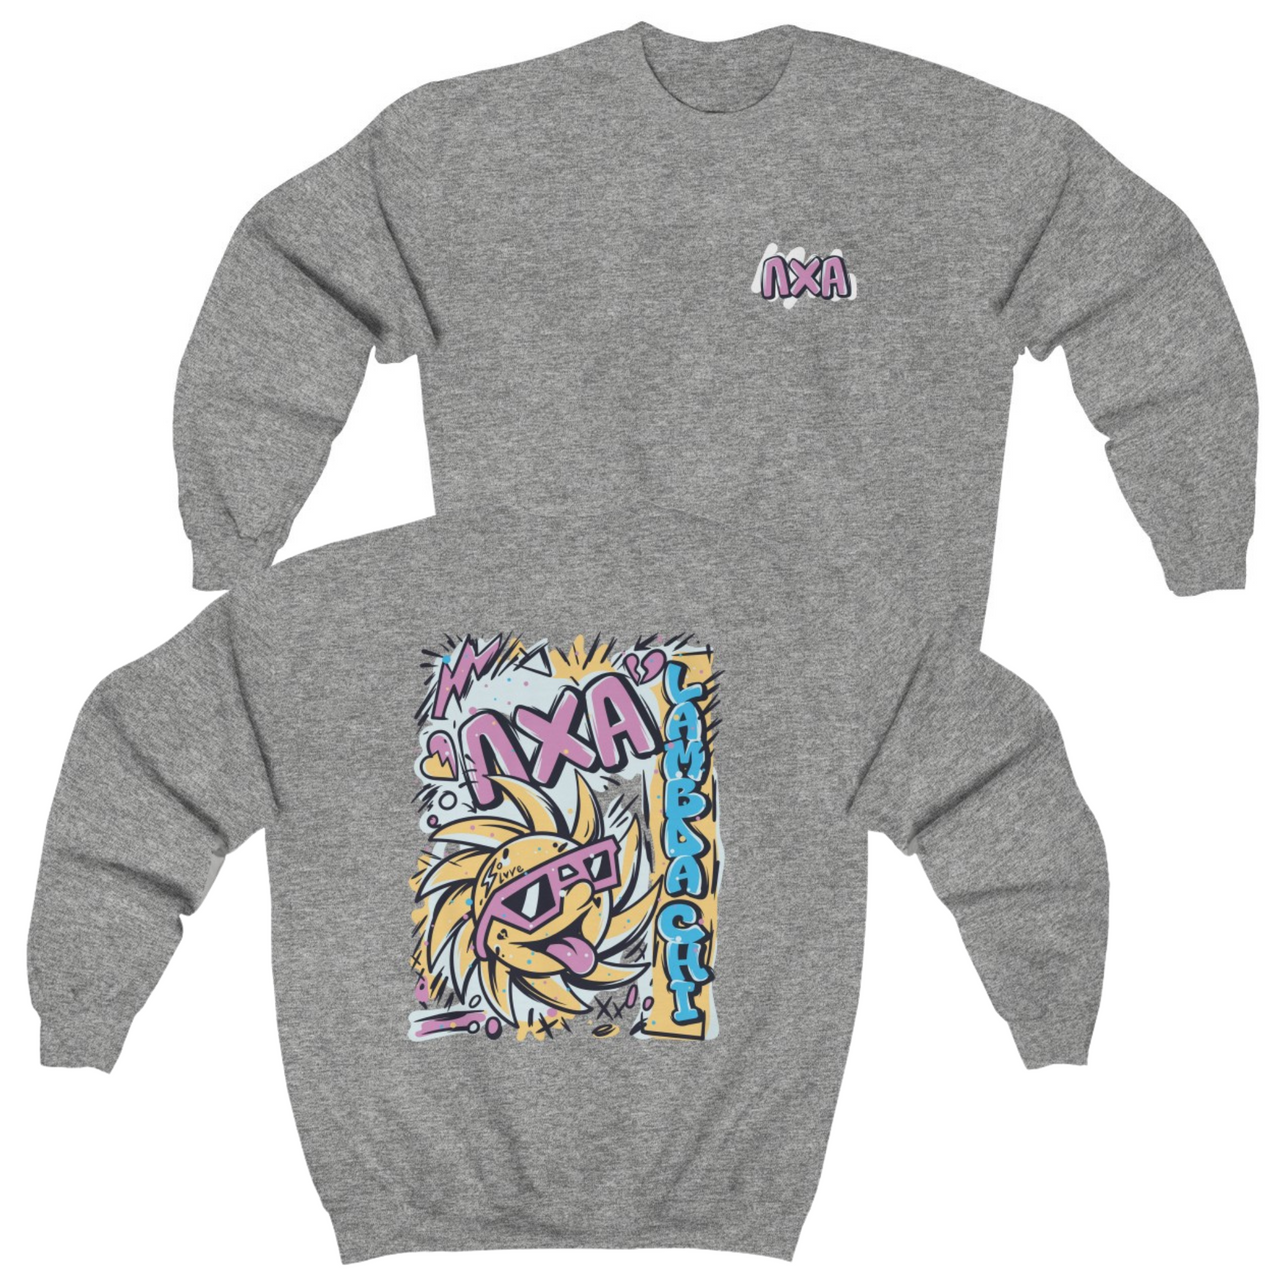 Grey Lambda Chi Alpha Graphic Crewneck Sweatshirt | Fun in the Sun | Lambda Chi Alpha Fraternity Apparel 